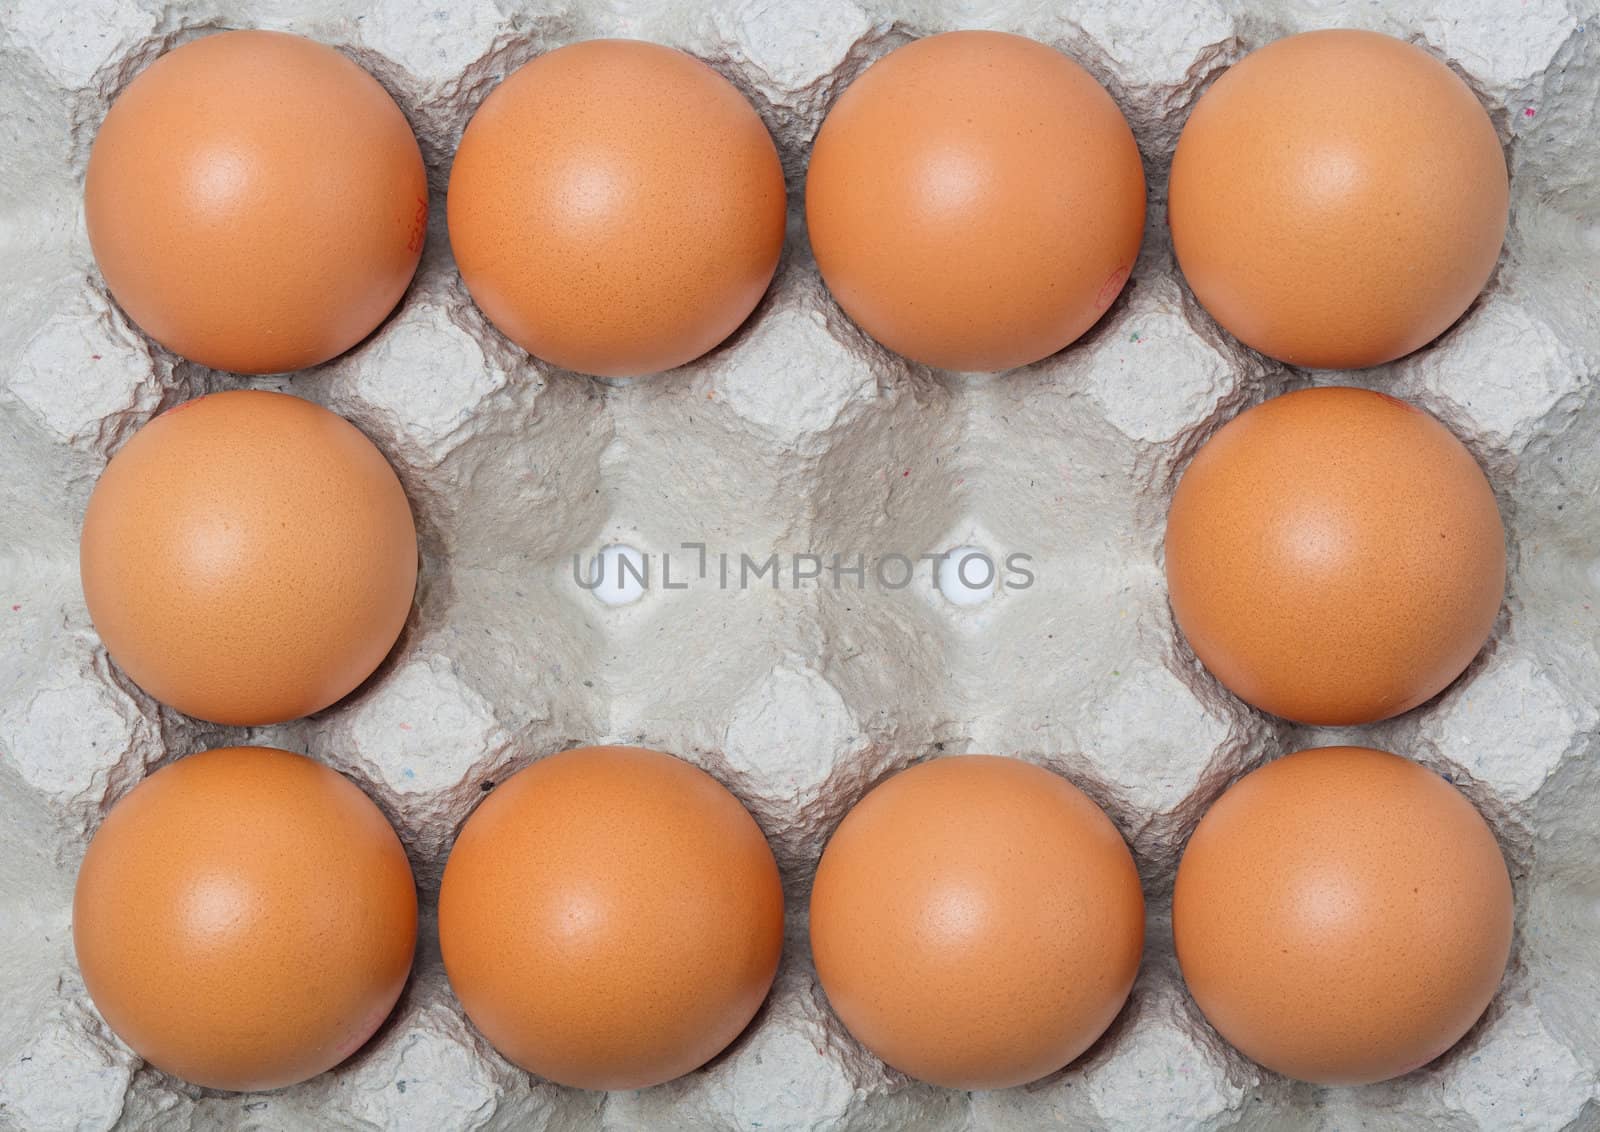 Chicken eggs by smuay